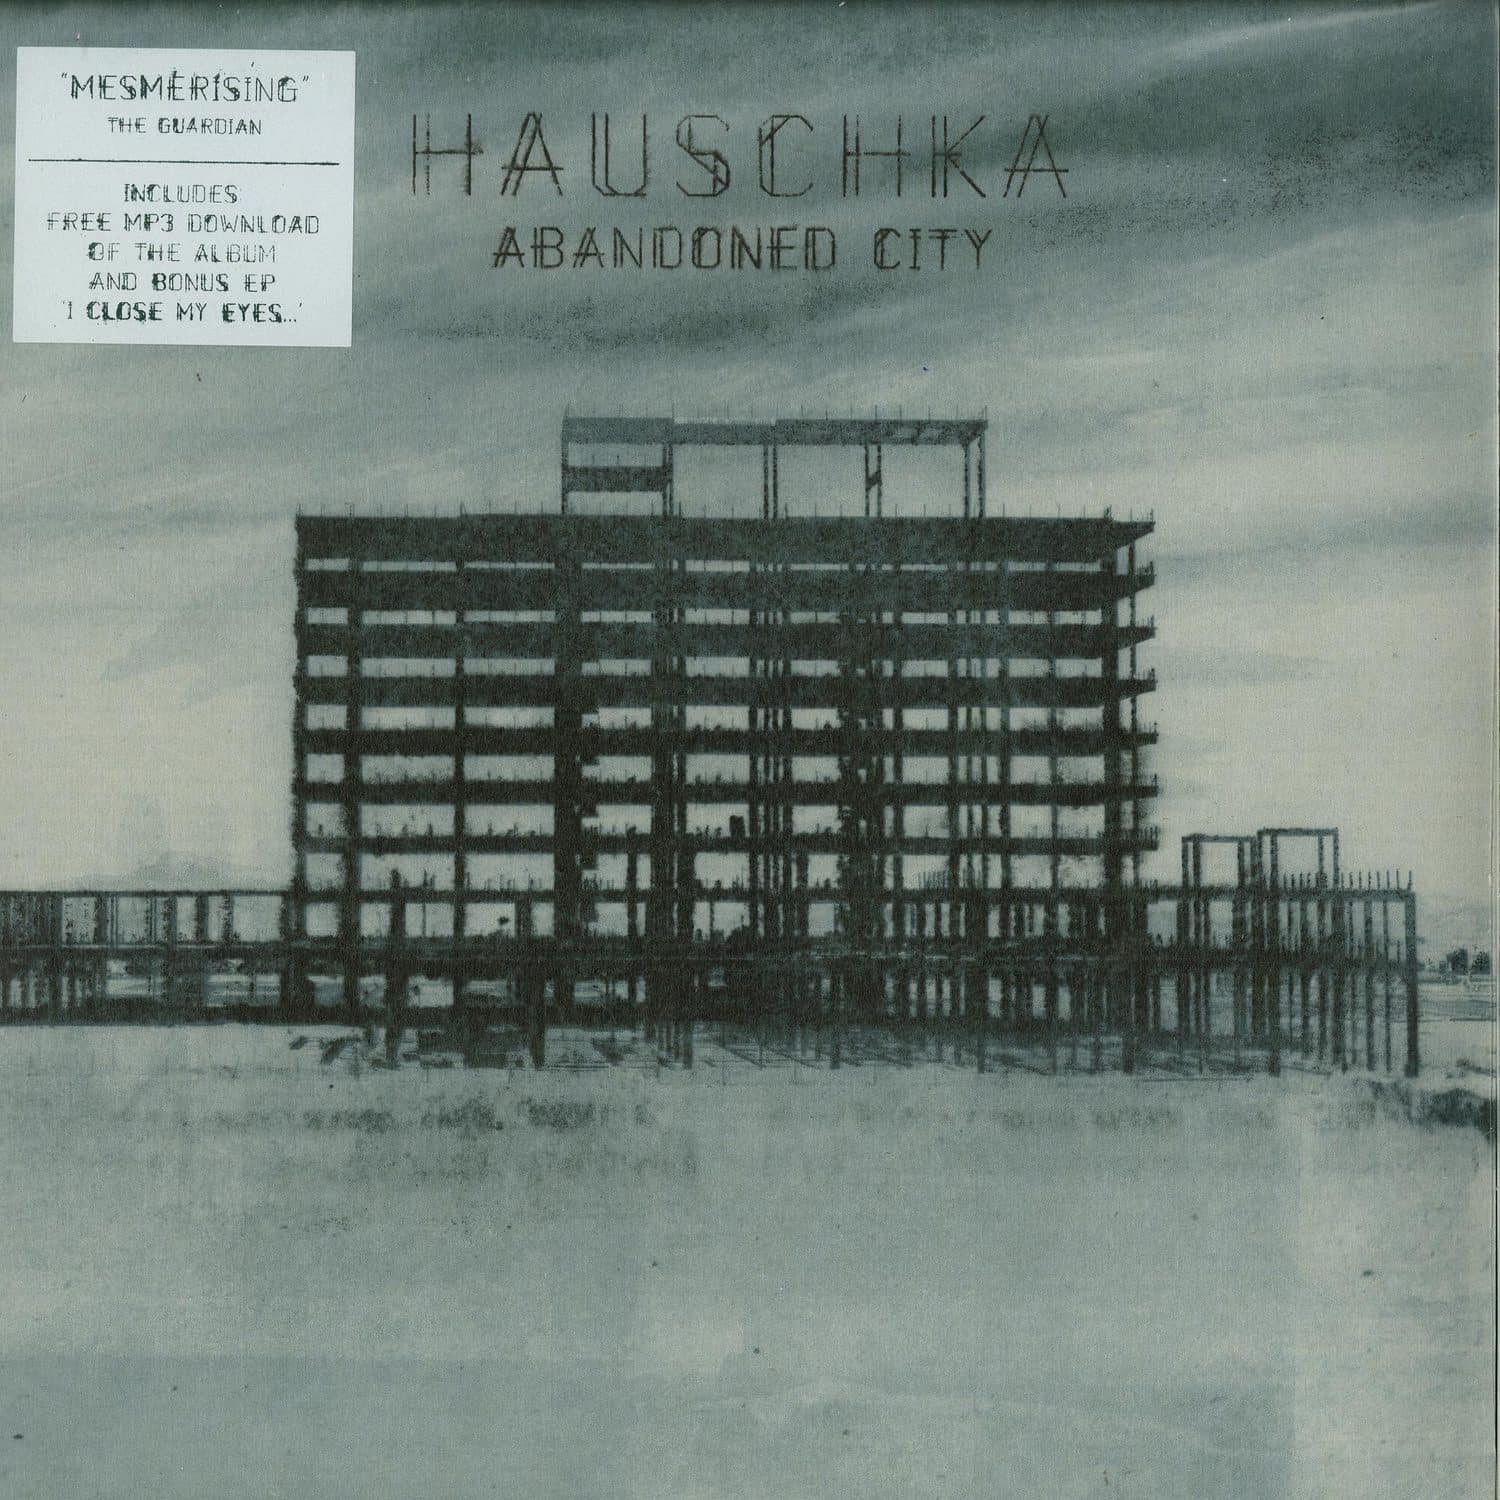 Hauschka - ABANDONED CITY 